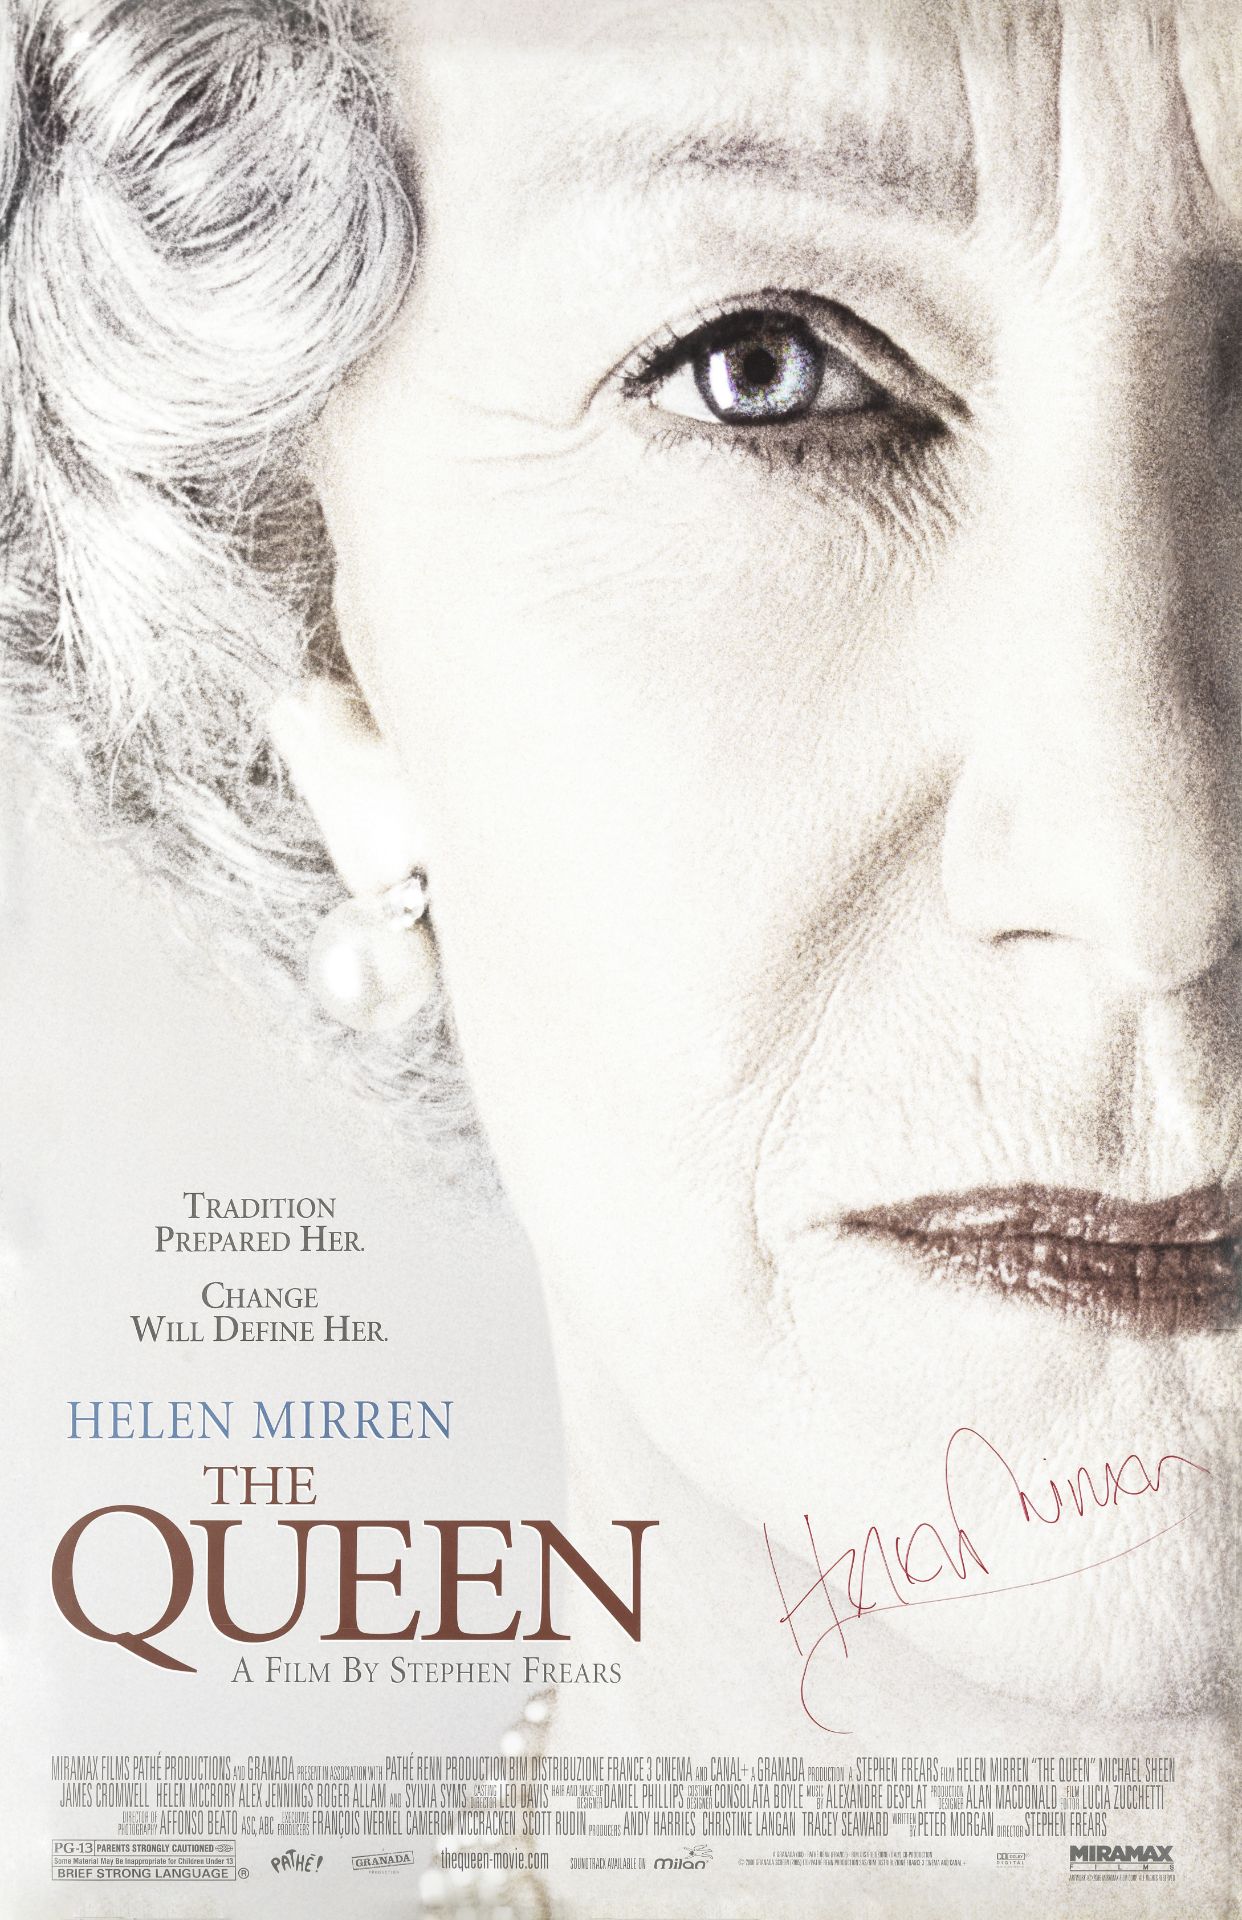 The Queen: A poster signed by Helen Mirren, Miramax, 2006,